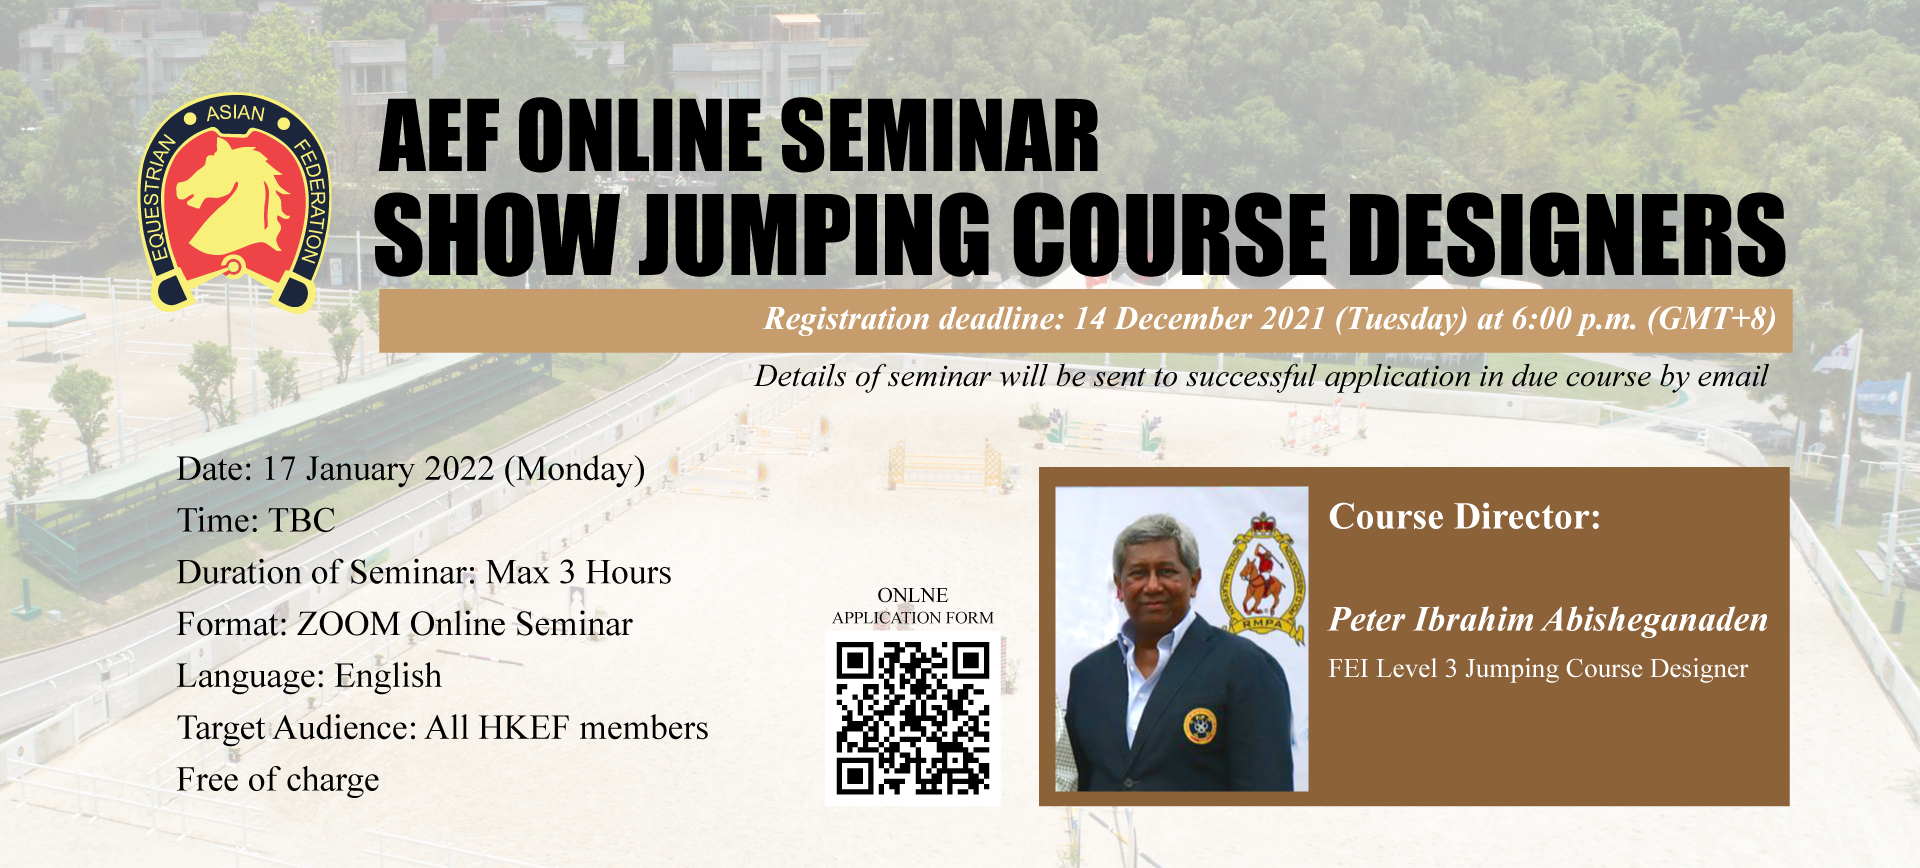 AEF-Online-Seminar-Show-Jumping-Course-Designer